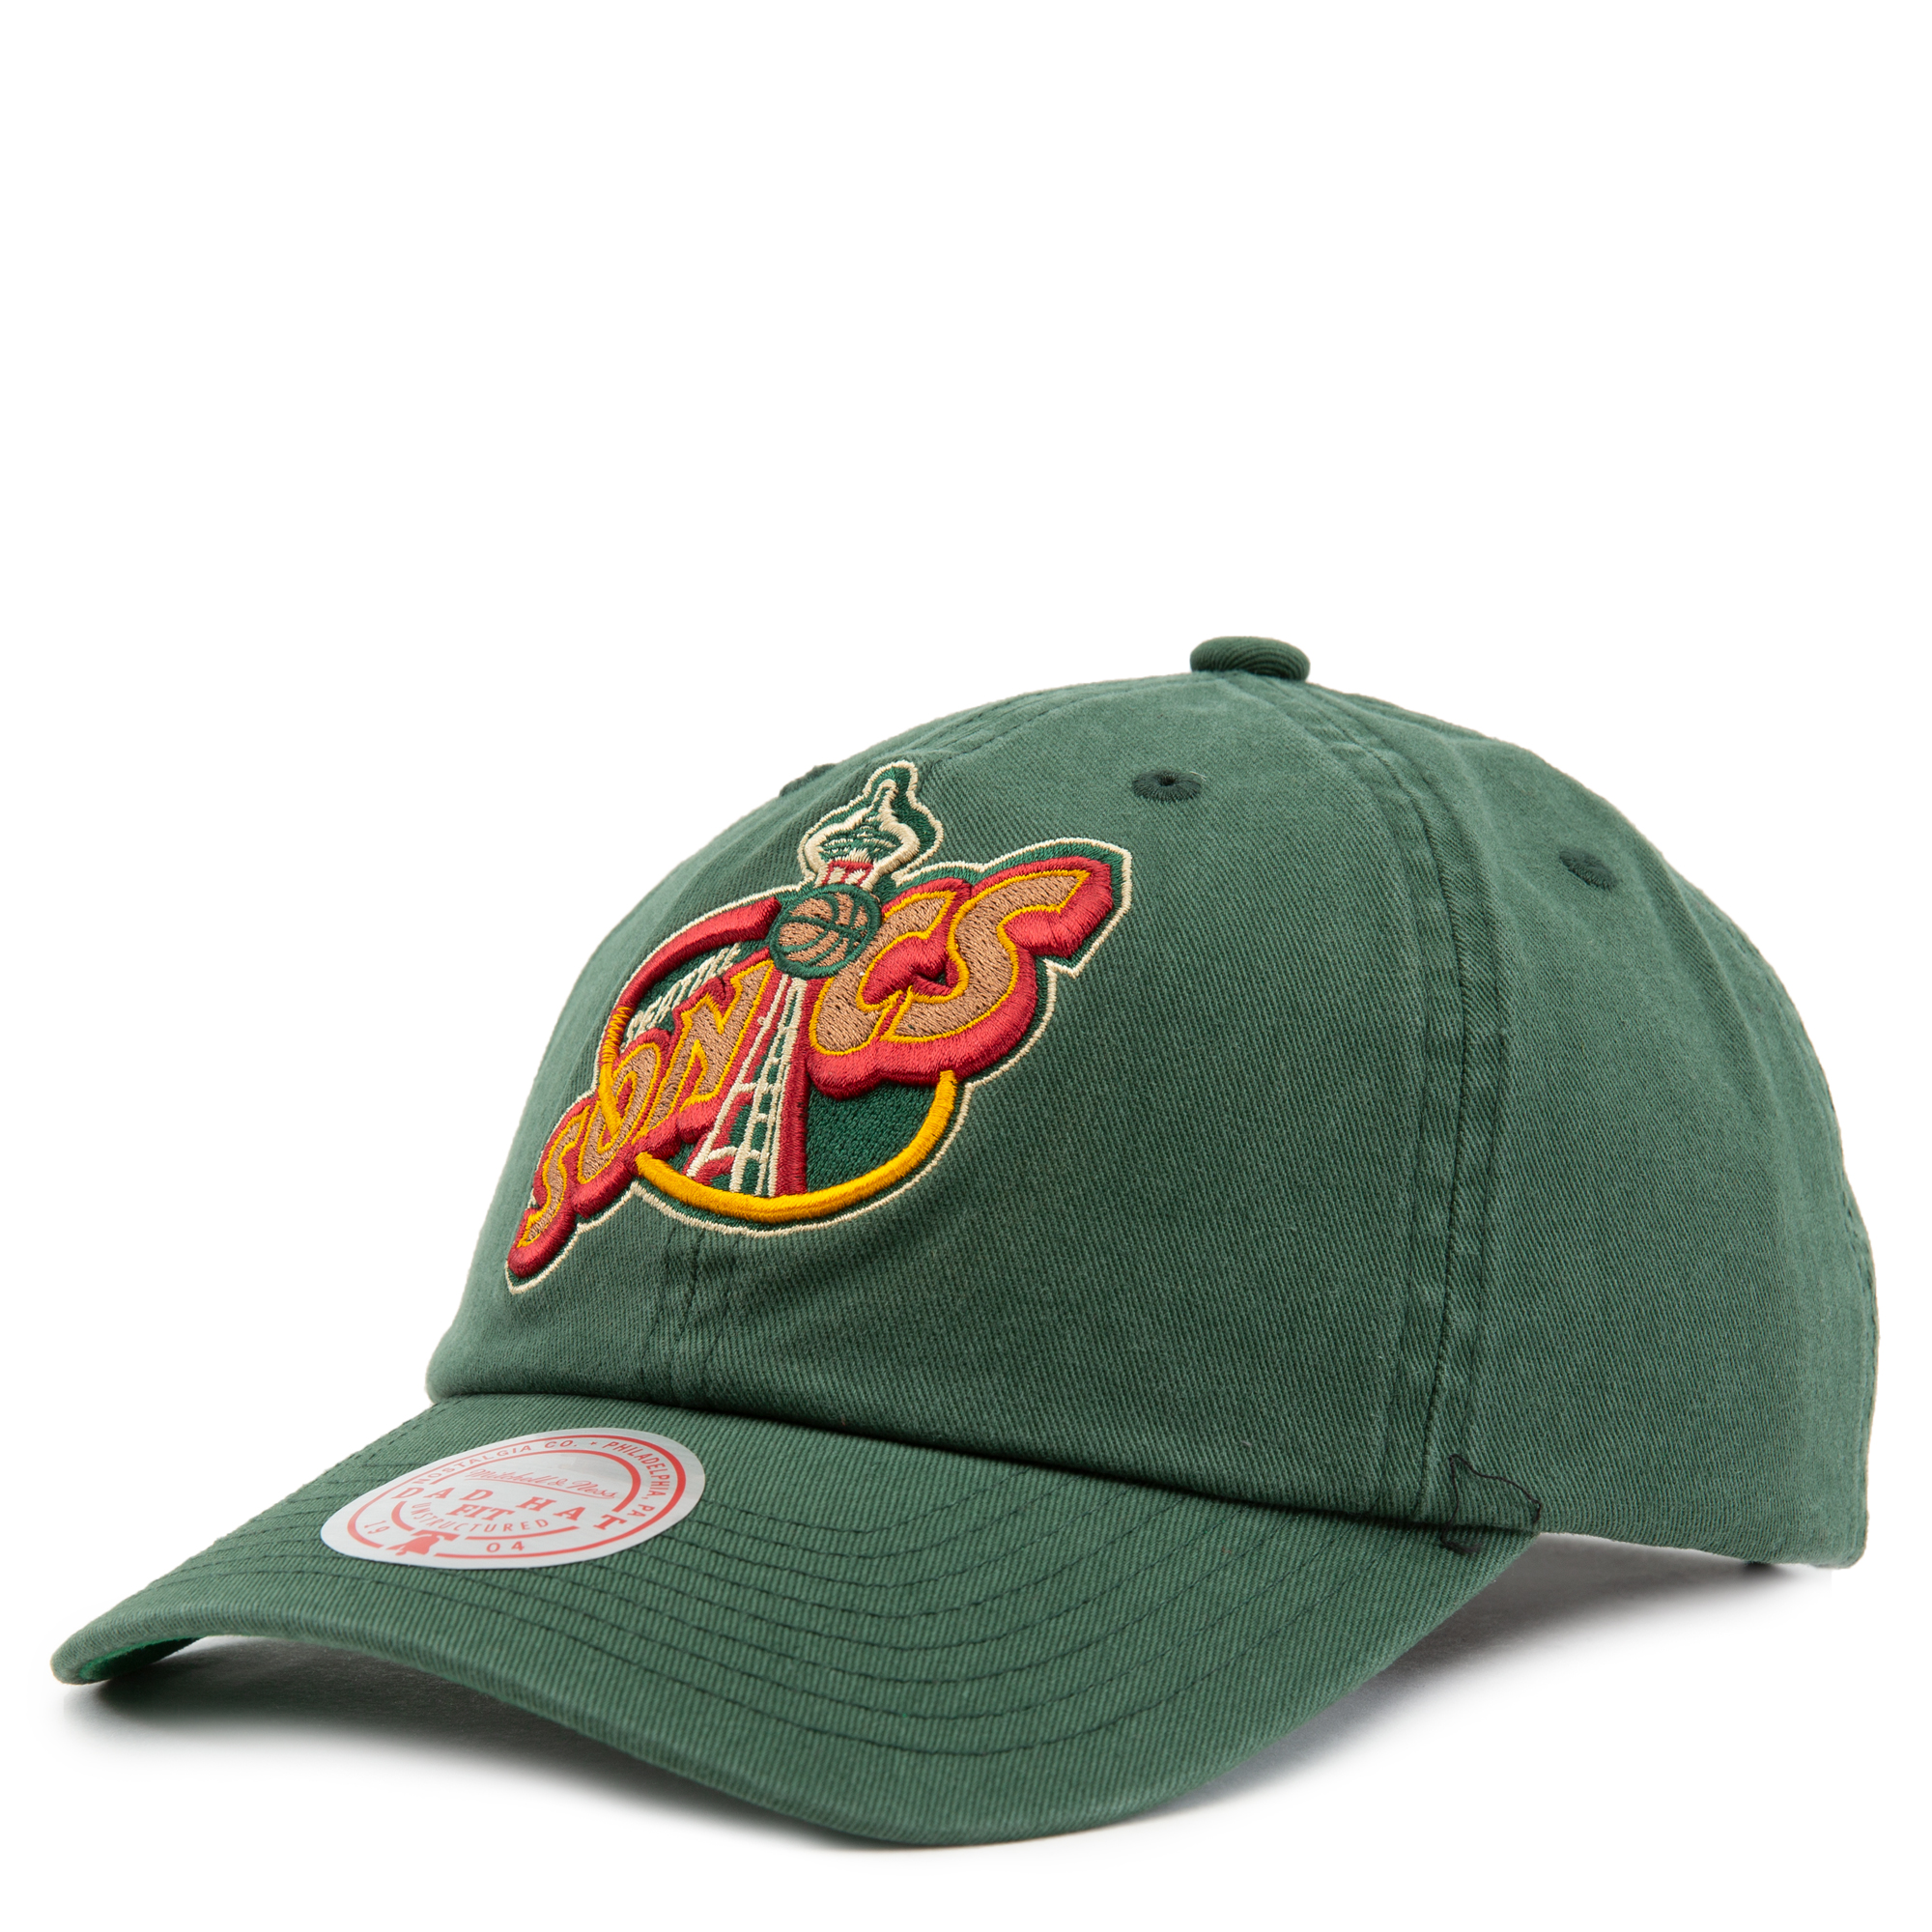  Mitchell & Ness Seattle Supersonics Sonics New Retro  Tailsweeper Green Era Snapback Hat Cap : Sports & Outdoors